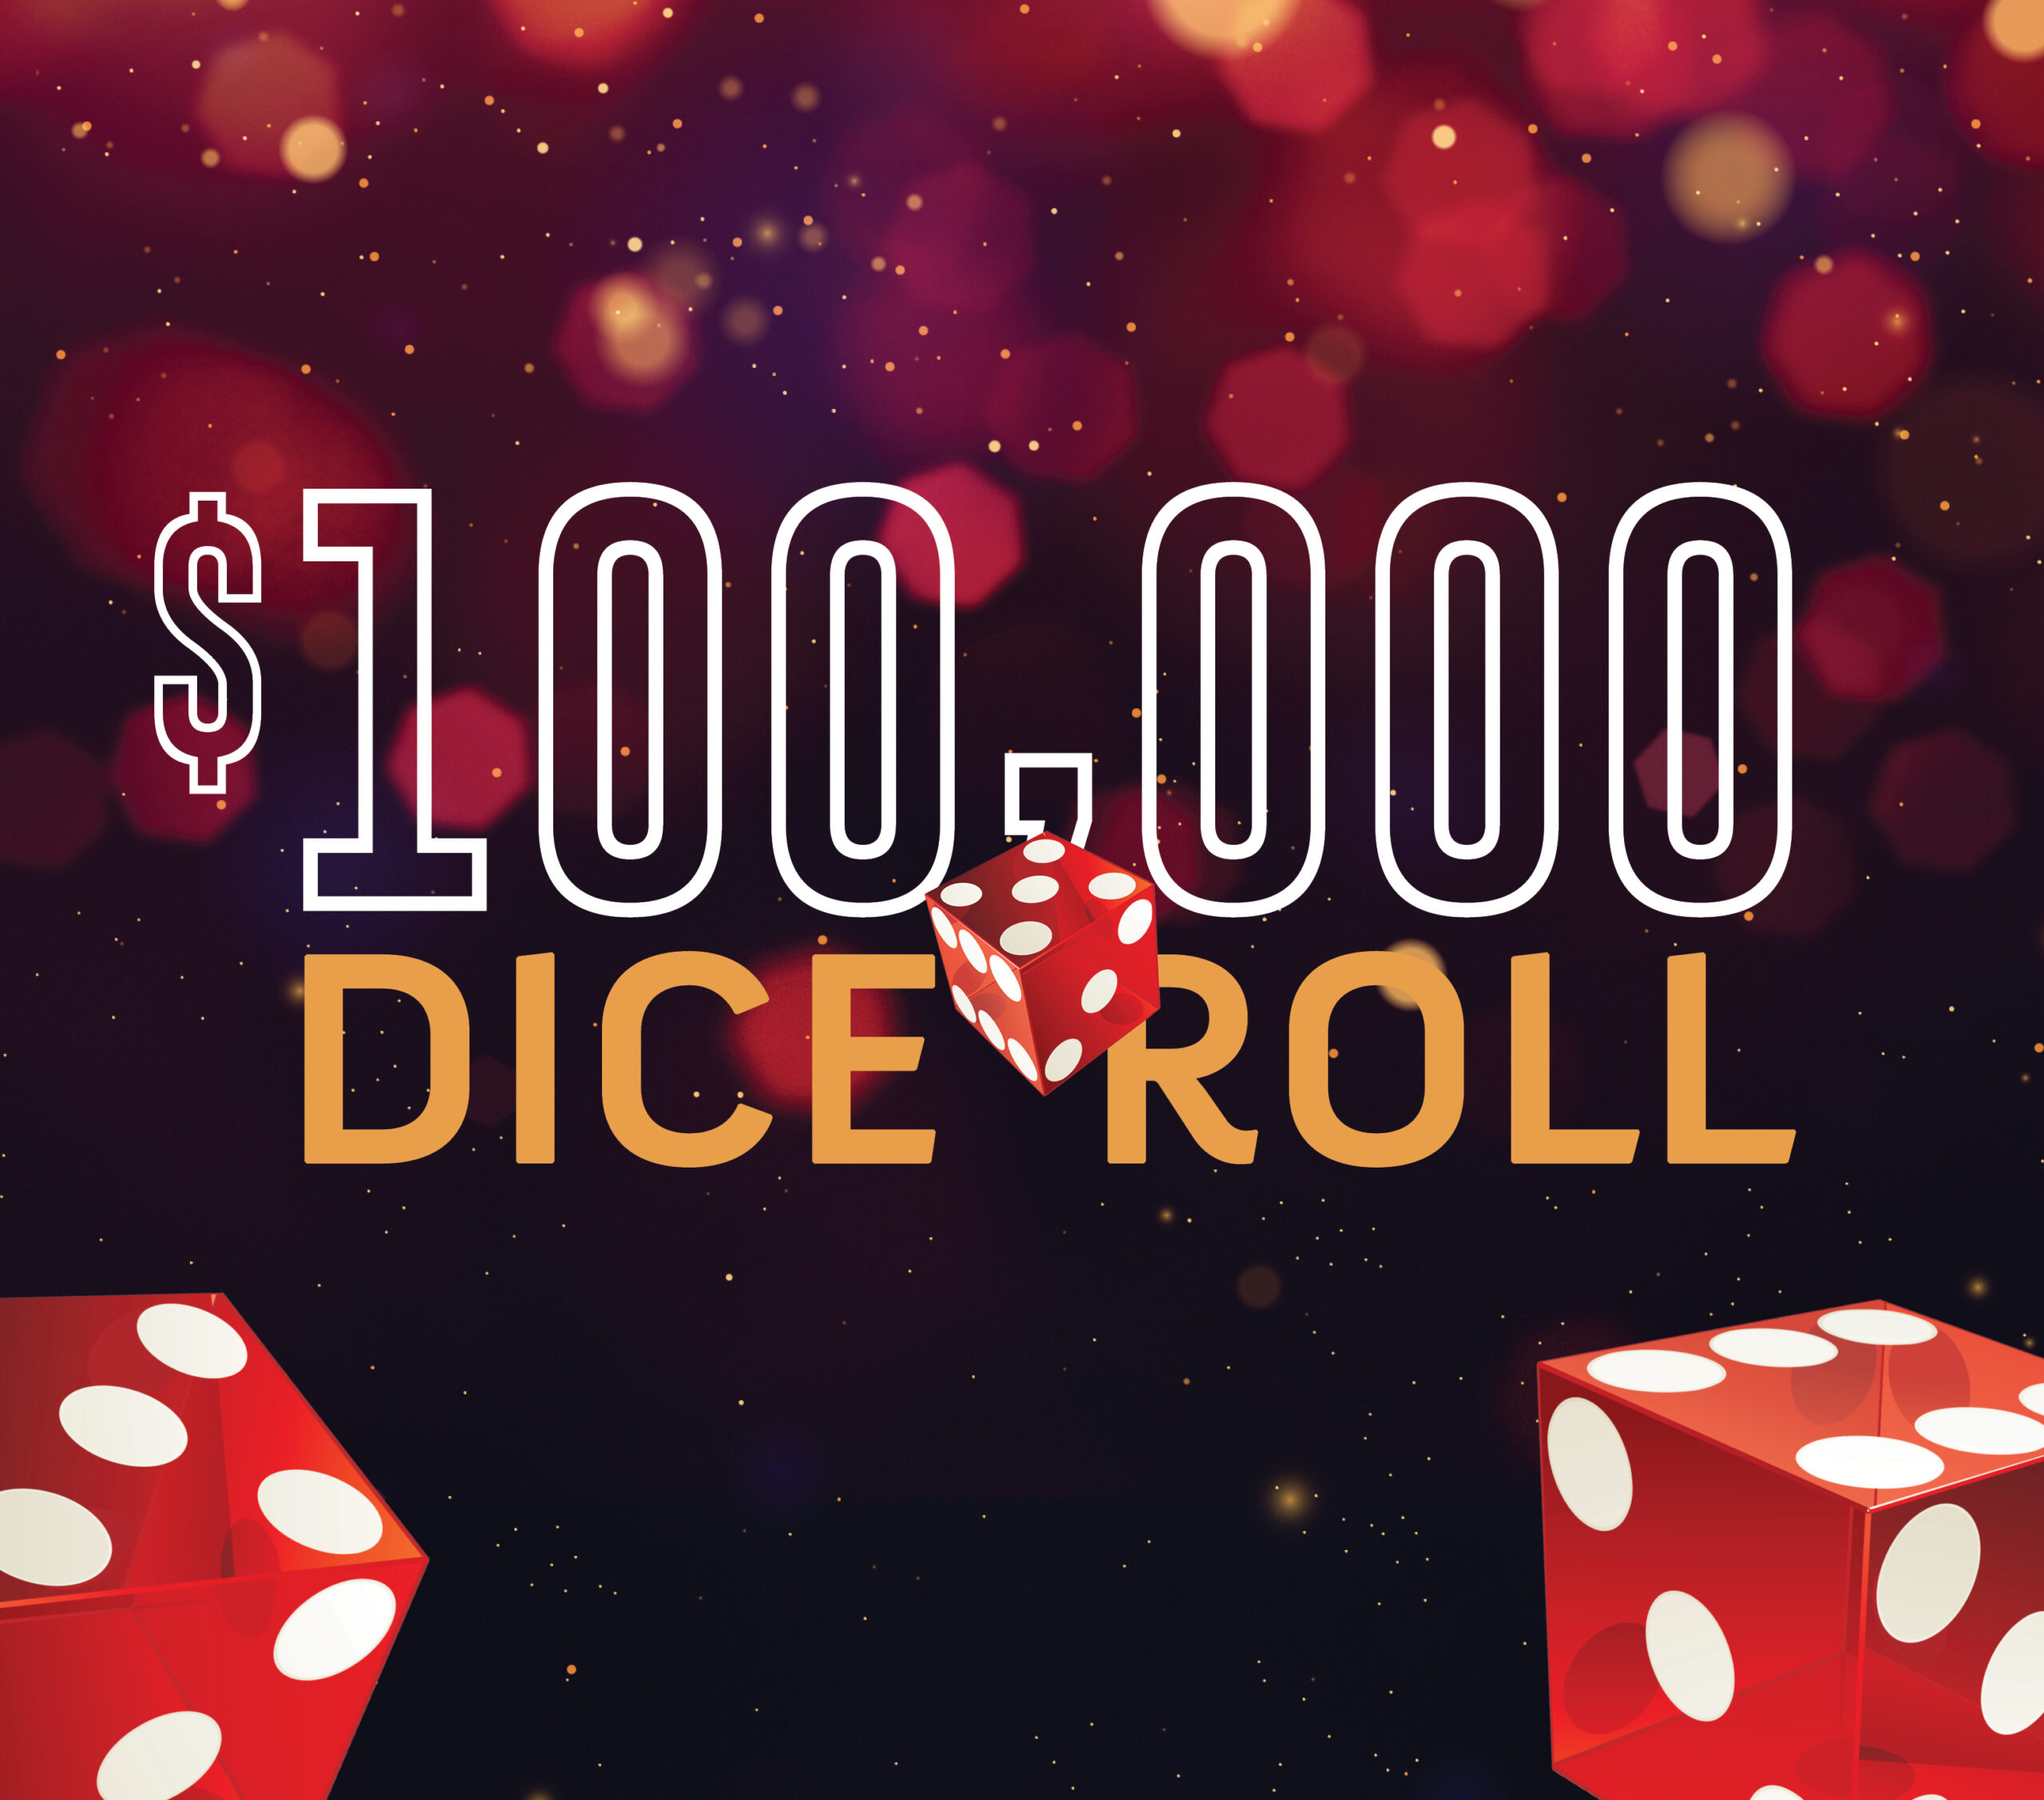 $100,000 DICE ROLL